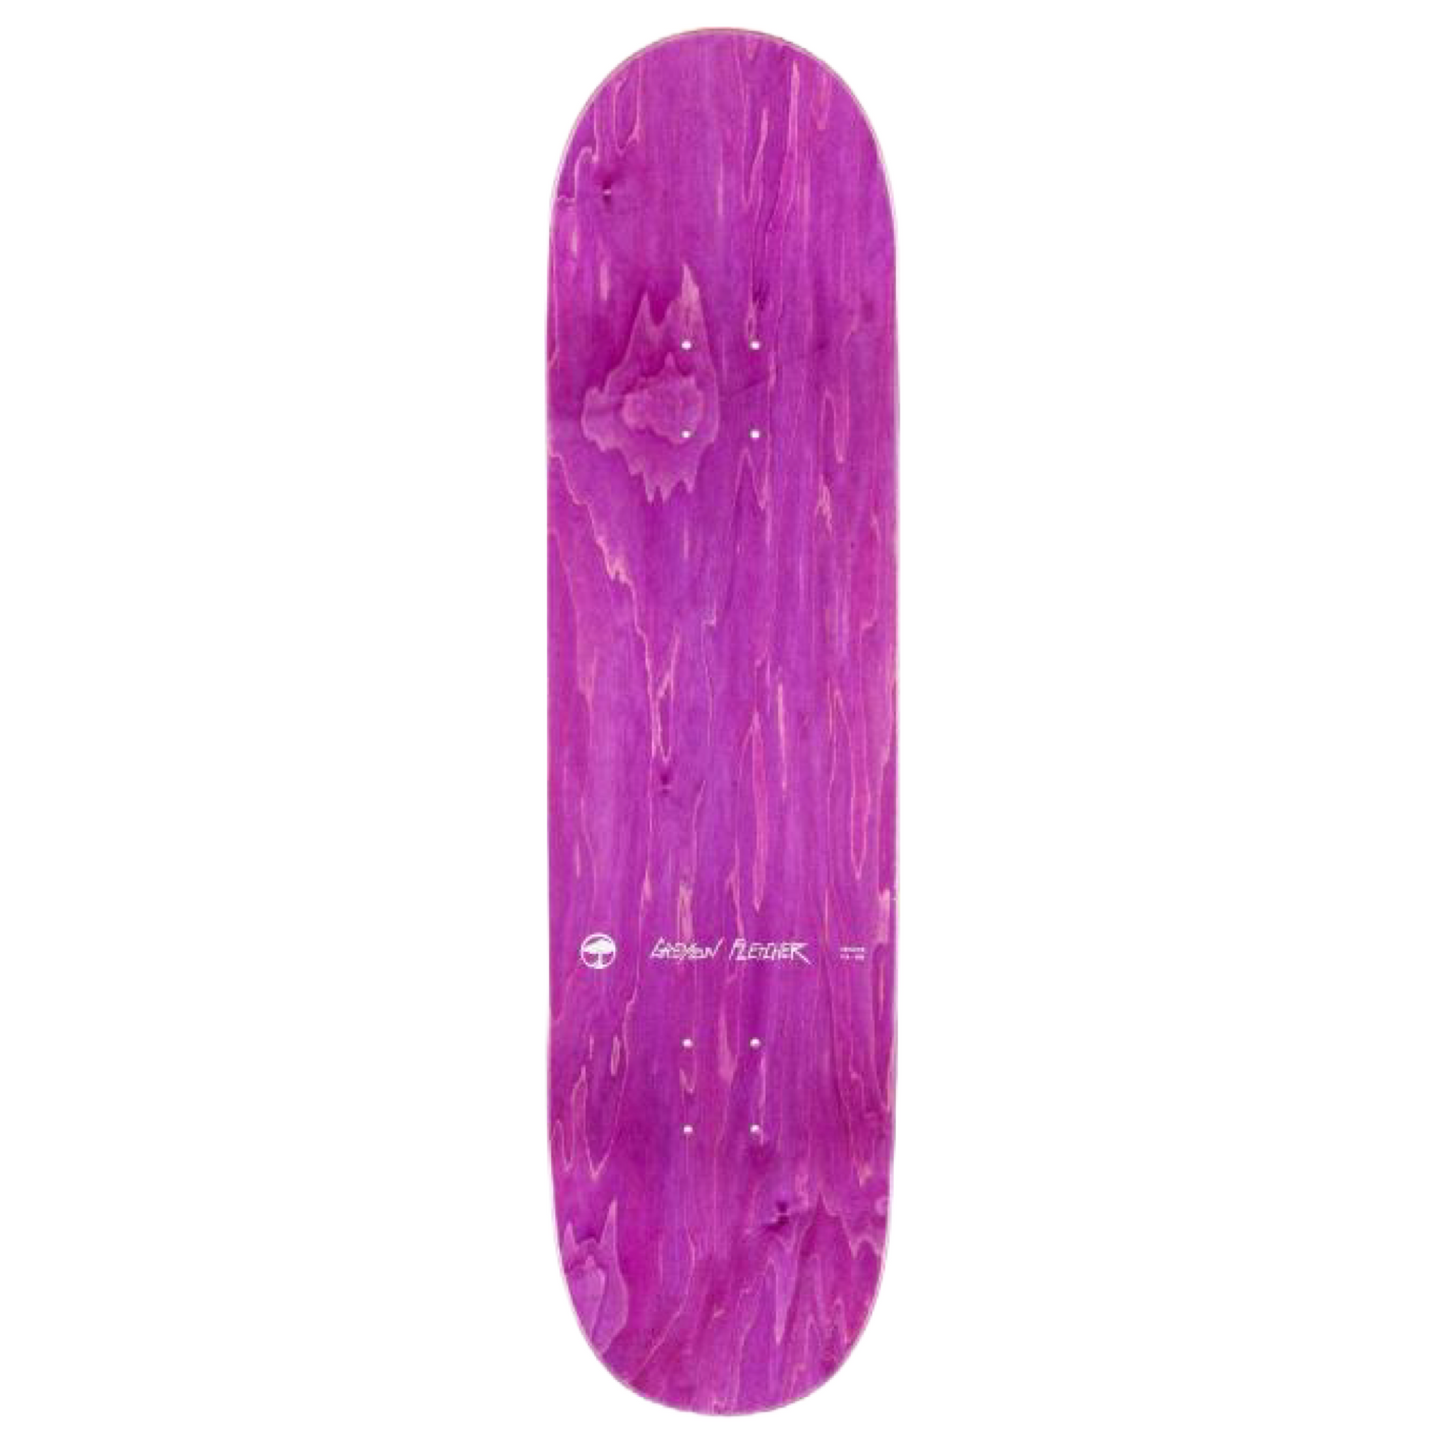 Arbor Skateboards - Greyson Fletcher ‘Darksider’ 8.5" Deck